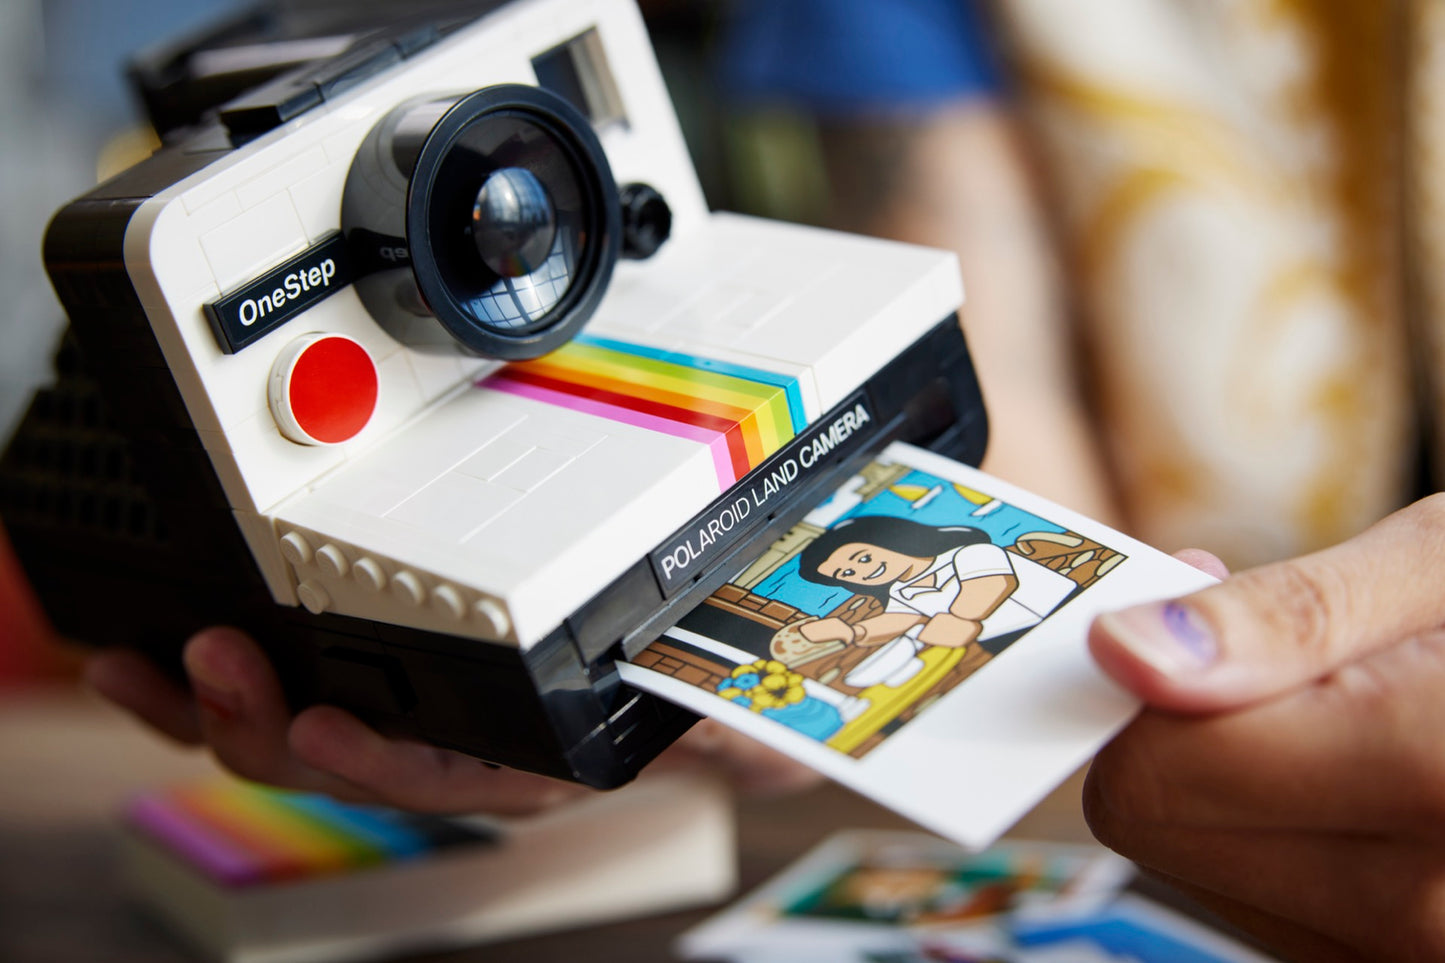 Polaroid OneStep SX-70 Camera